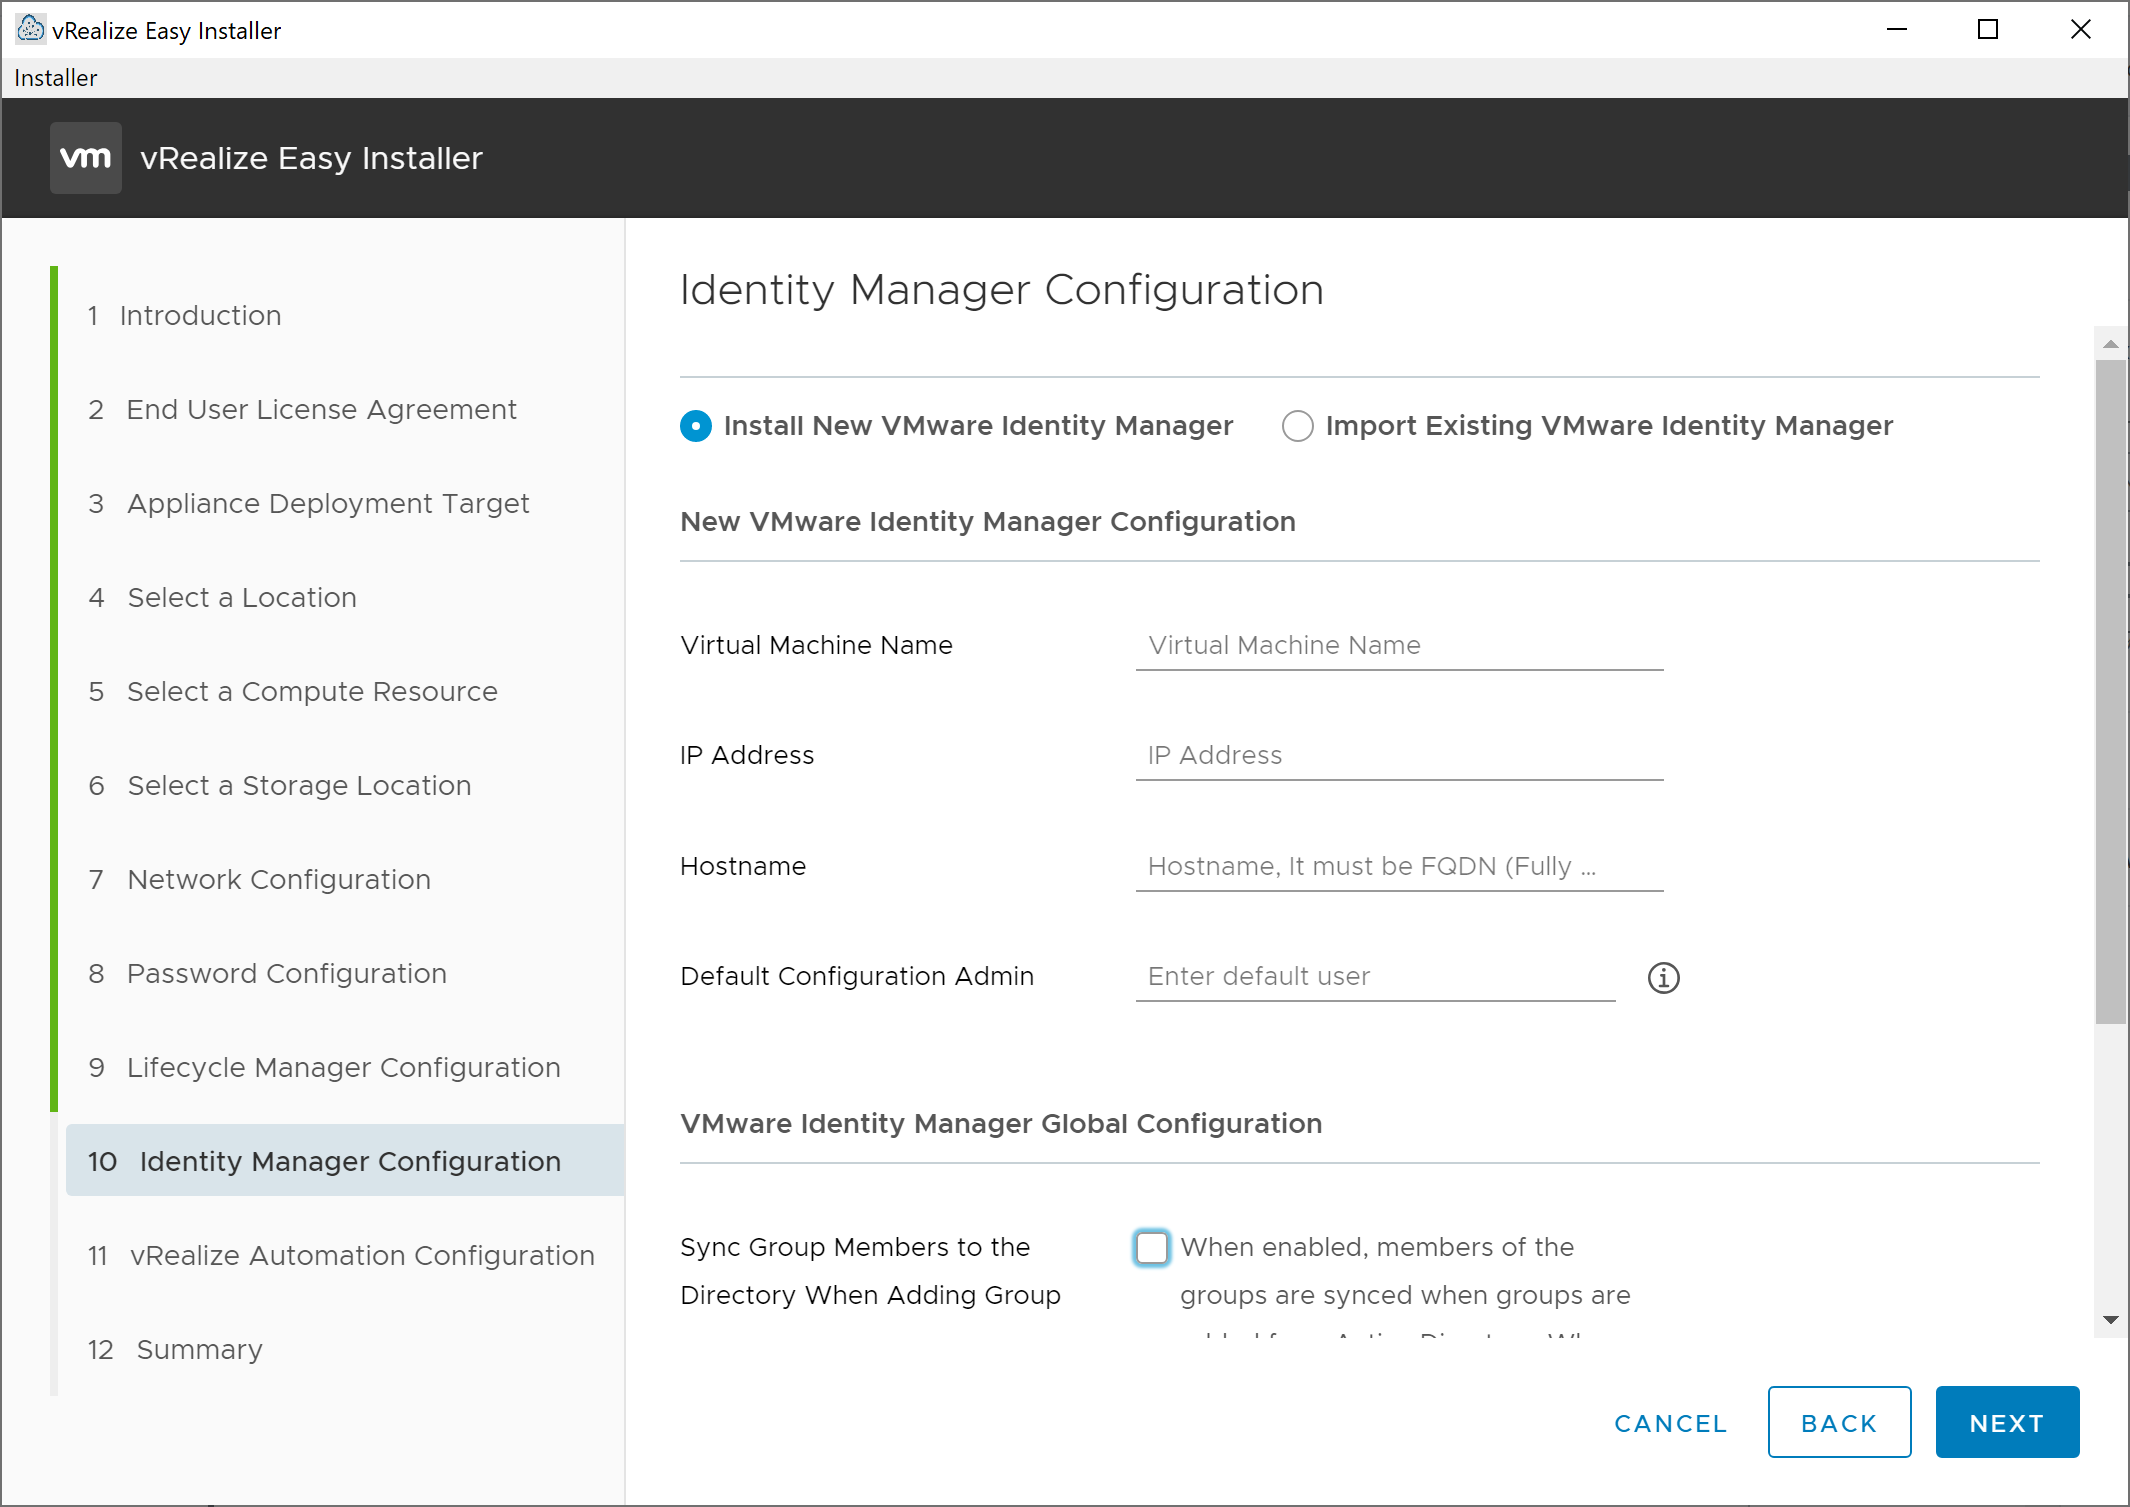 vRealize Easy Installer - New Install - Identity Manager Configuration - Install New Identity Manager